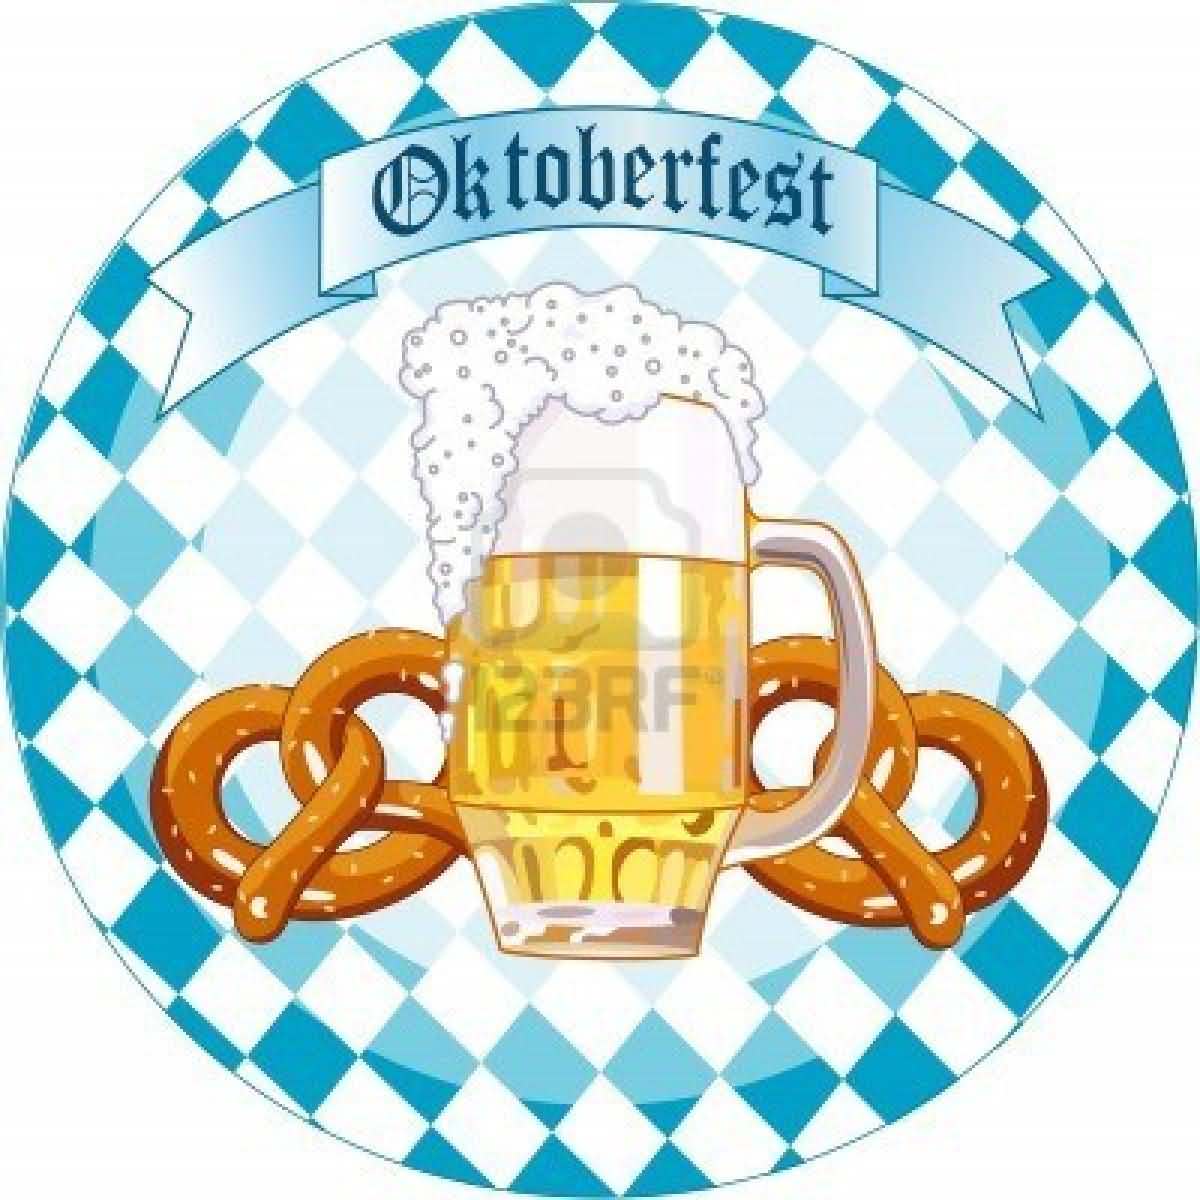 Oktoberfest 2017 Beer Mug Picture